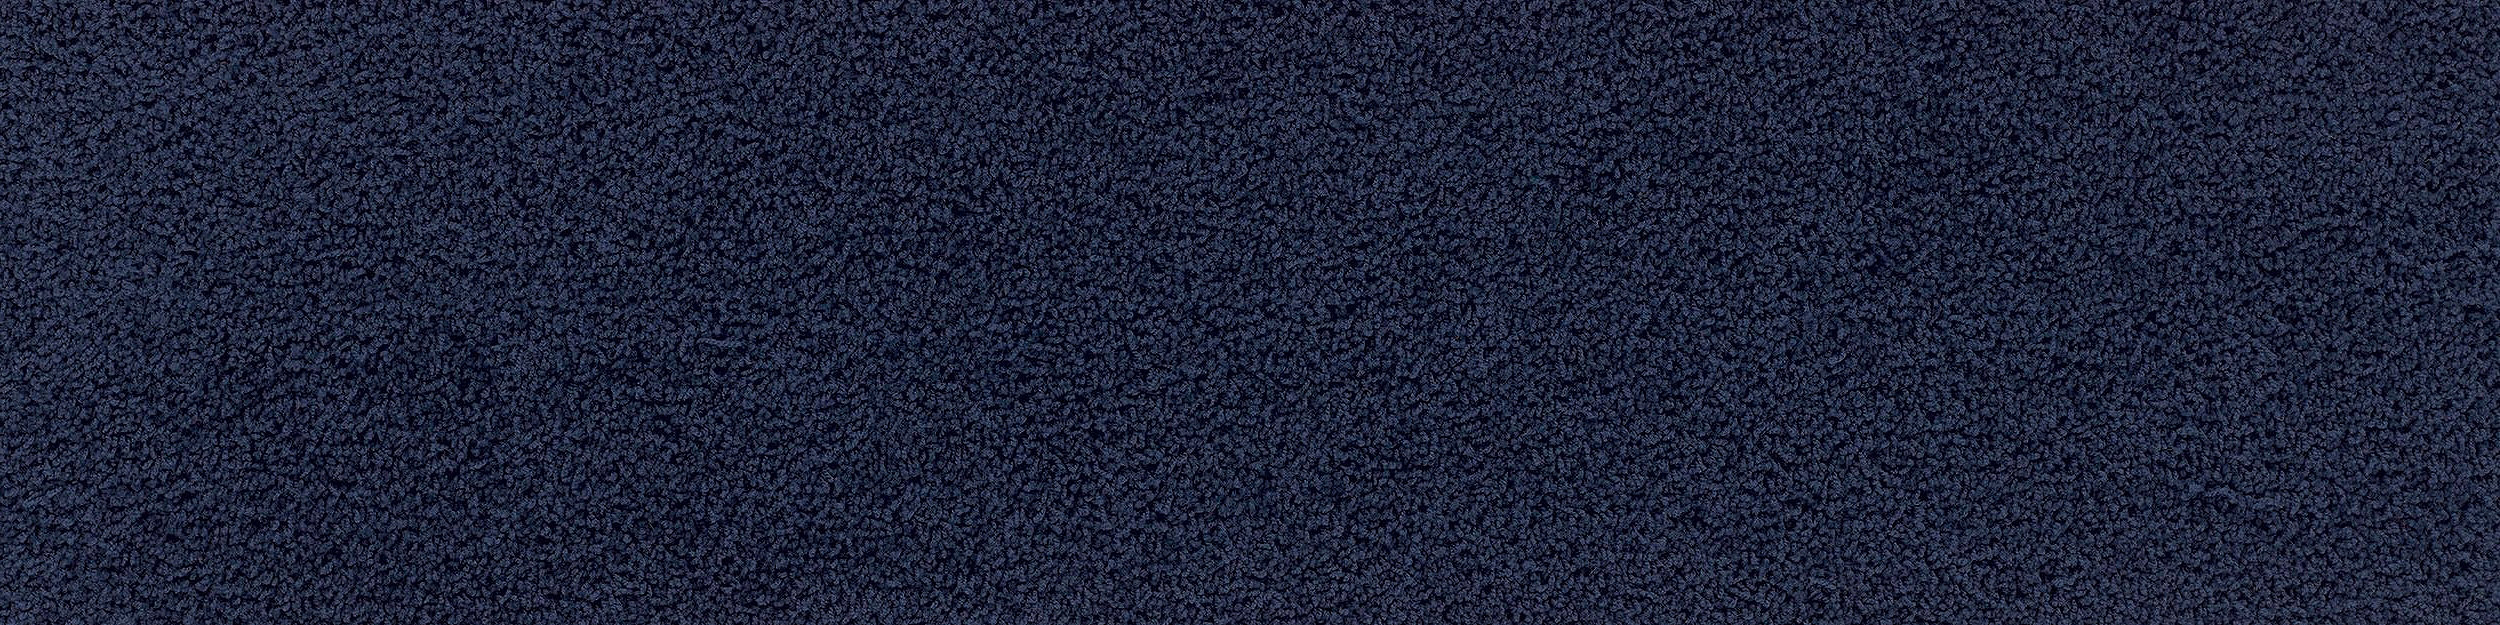 HN830 Carpet Tile In Cobalt número de imagen 10